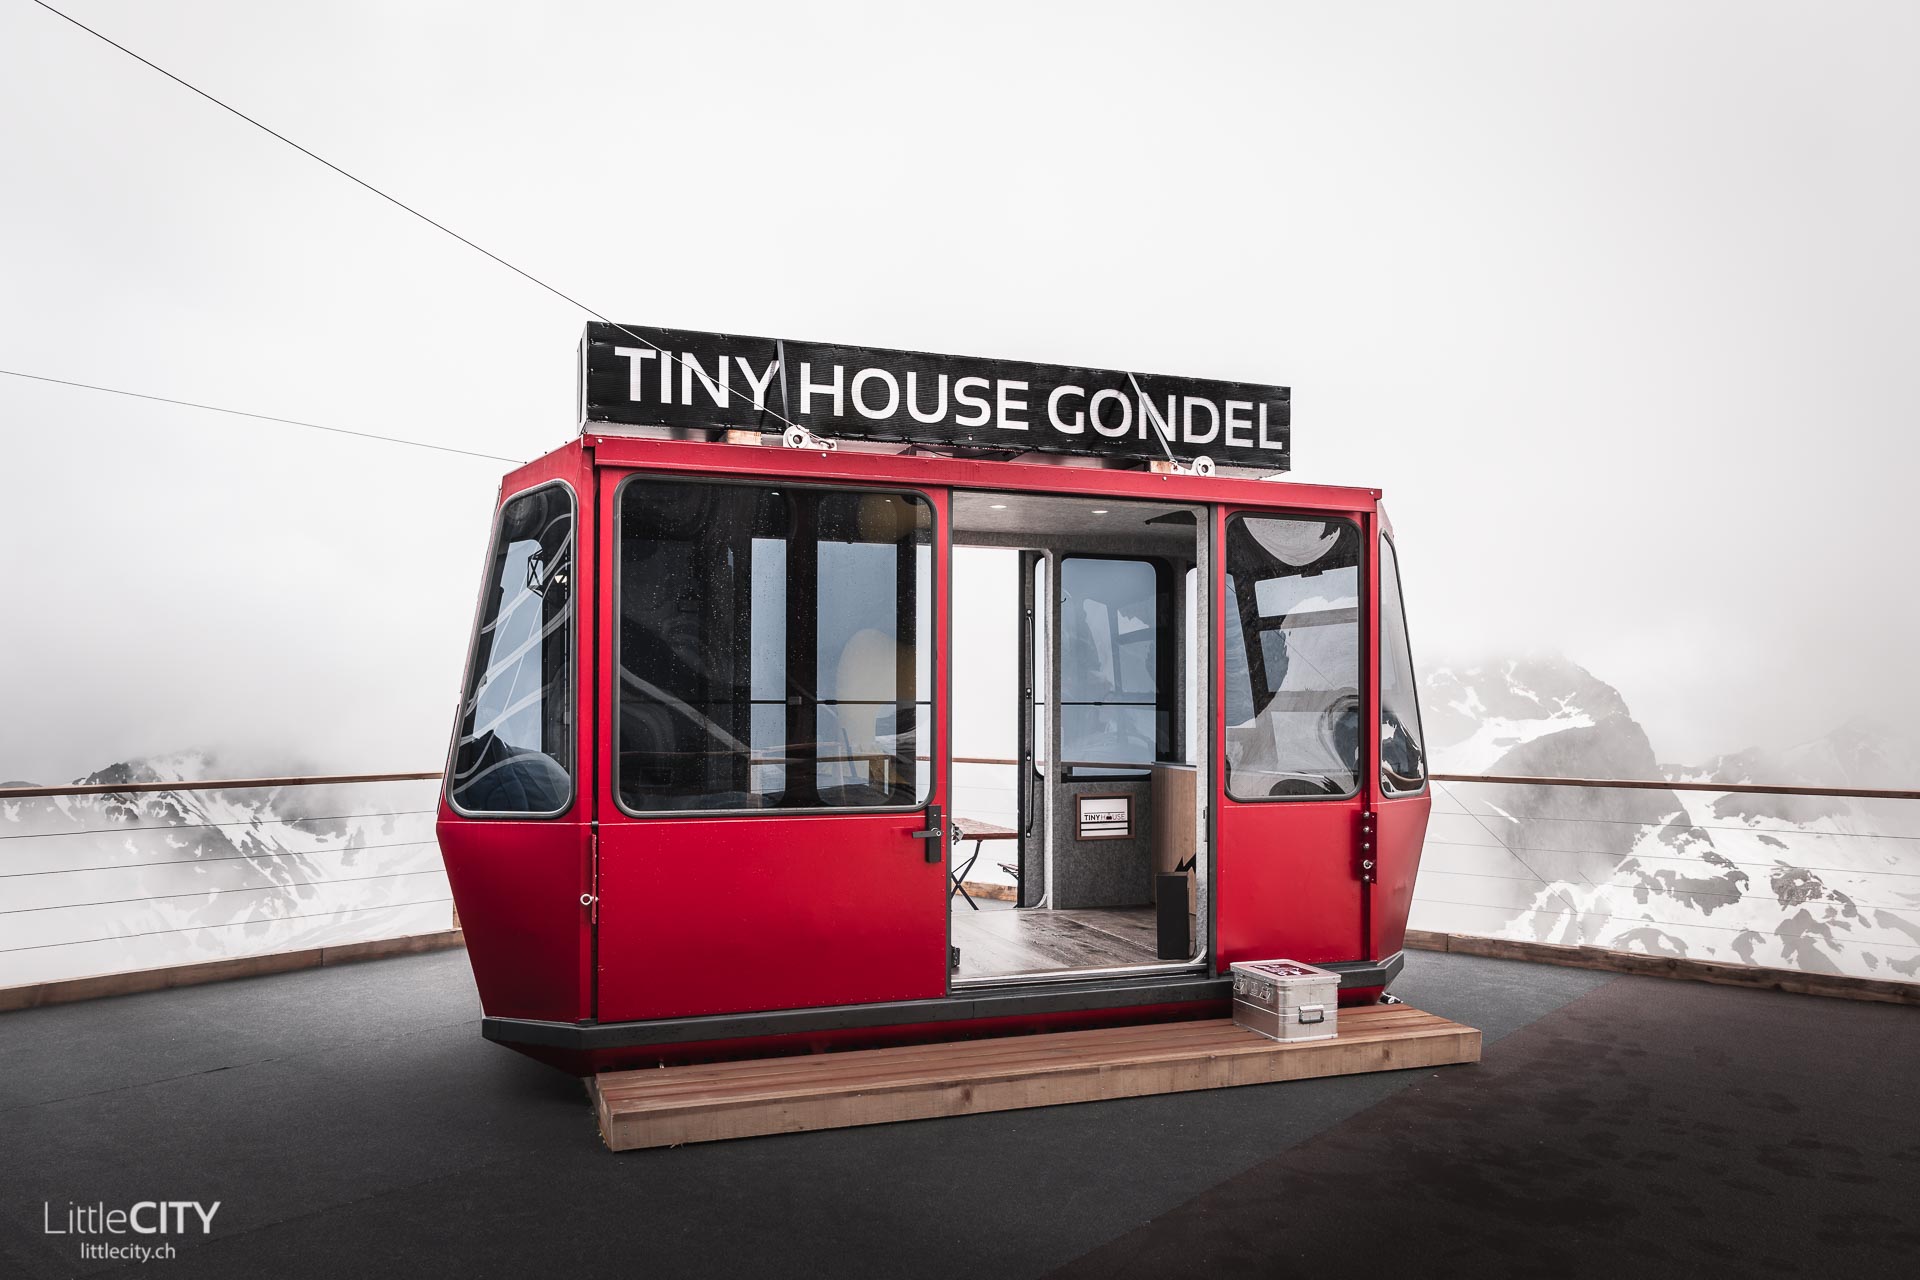 Tiny House Gondel by LittleCITY Piz Nair